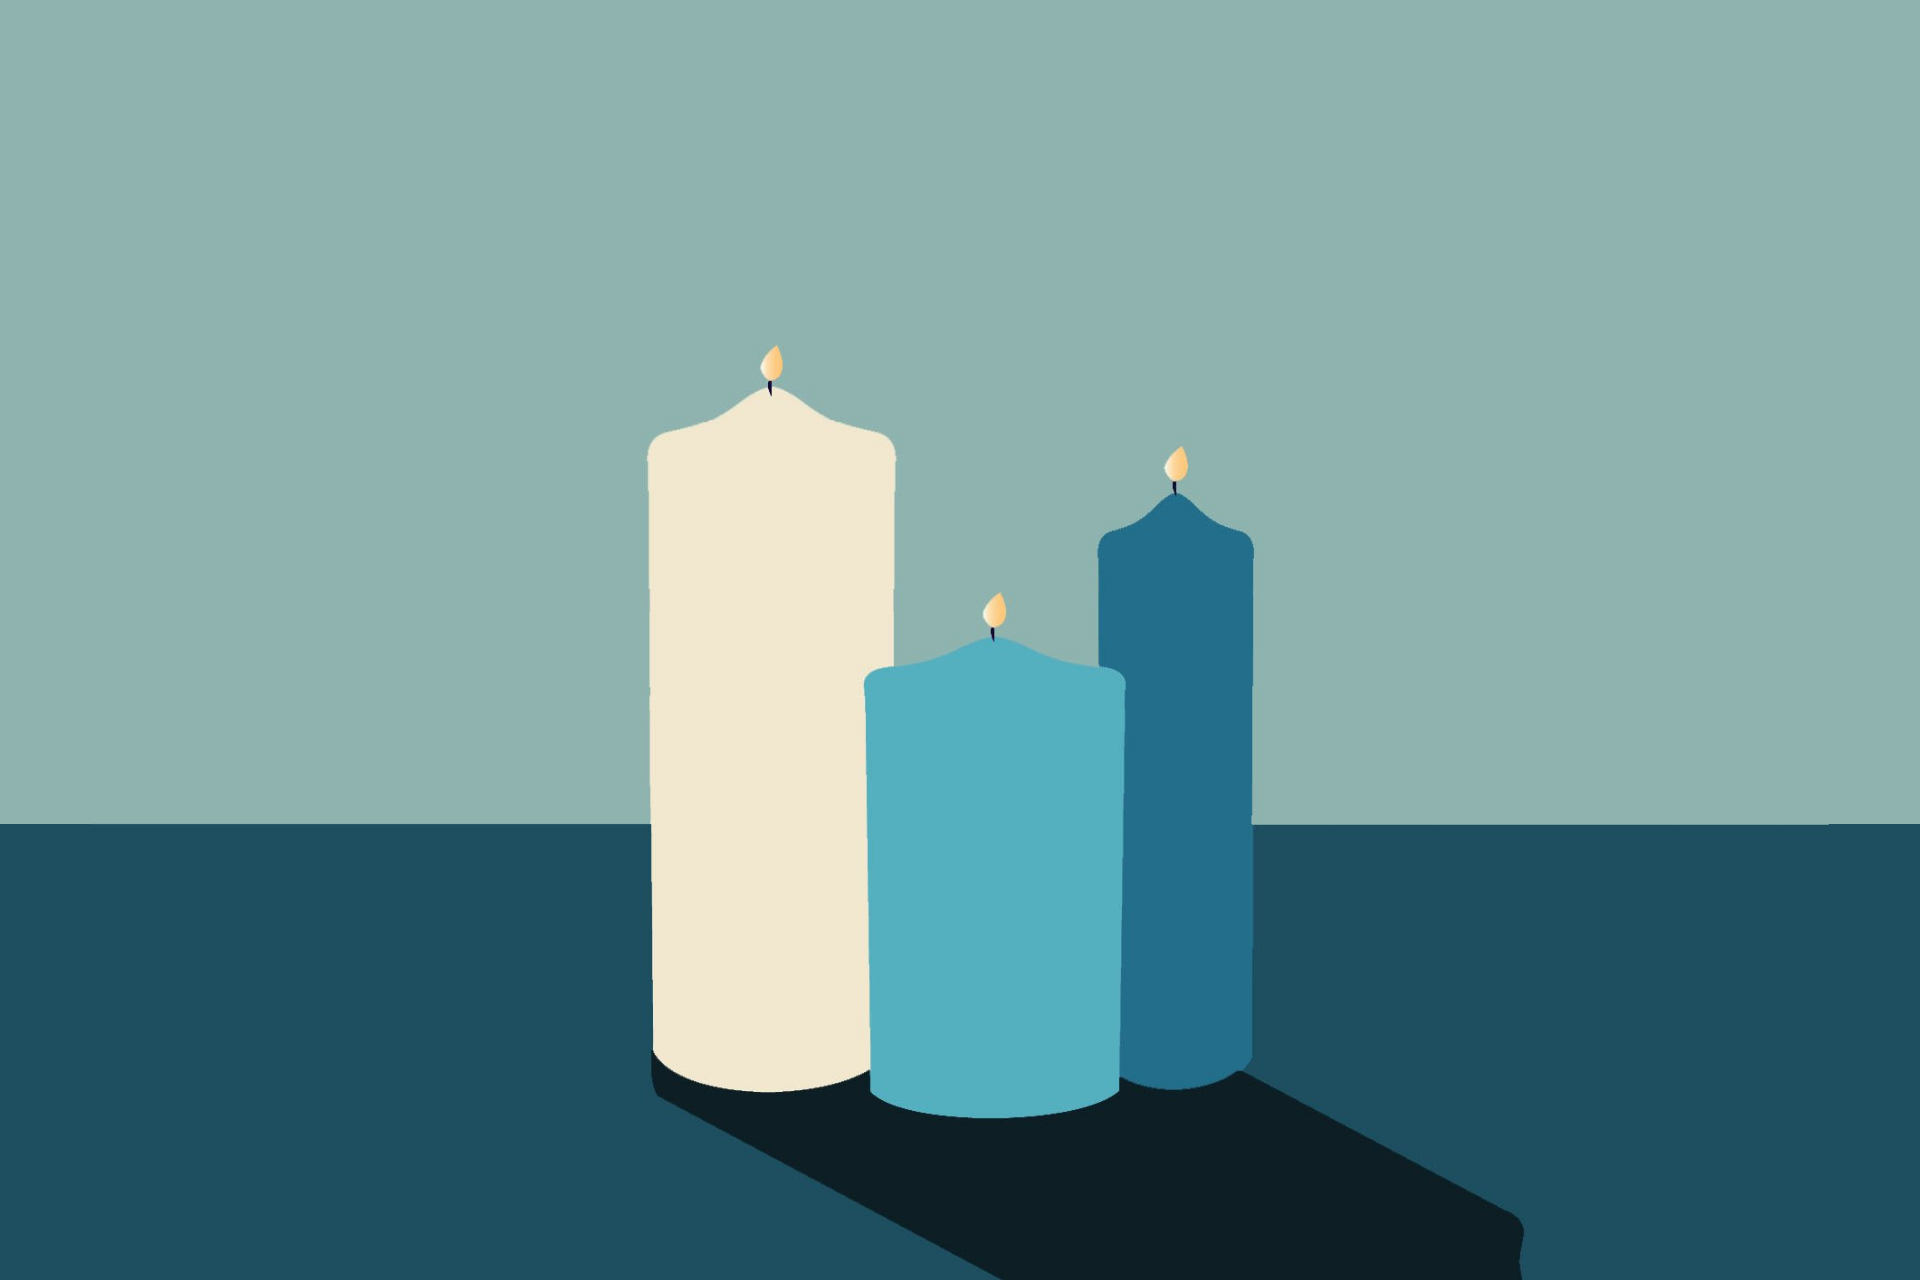 Cartoon of three candles